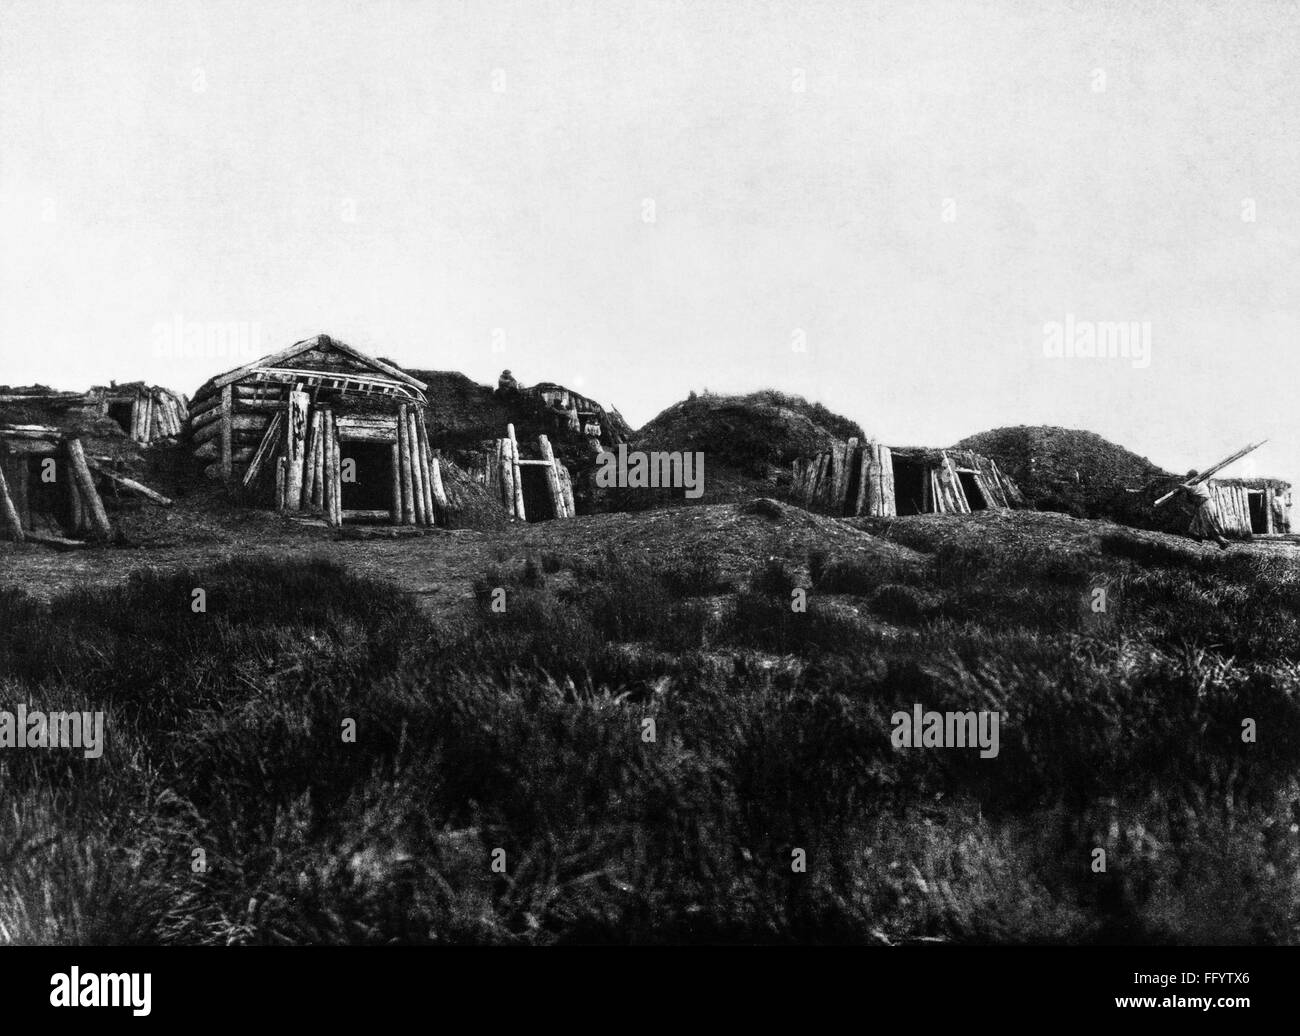 ALASKA: ESKIMO HOMES, 1928. /nEskimo dwellings at Hooper Bay, on the west coast of Alaska. Photographed by Edward S. Curtis, 1928. Stock Photo